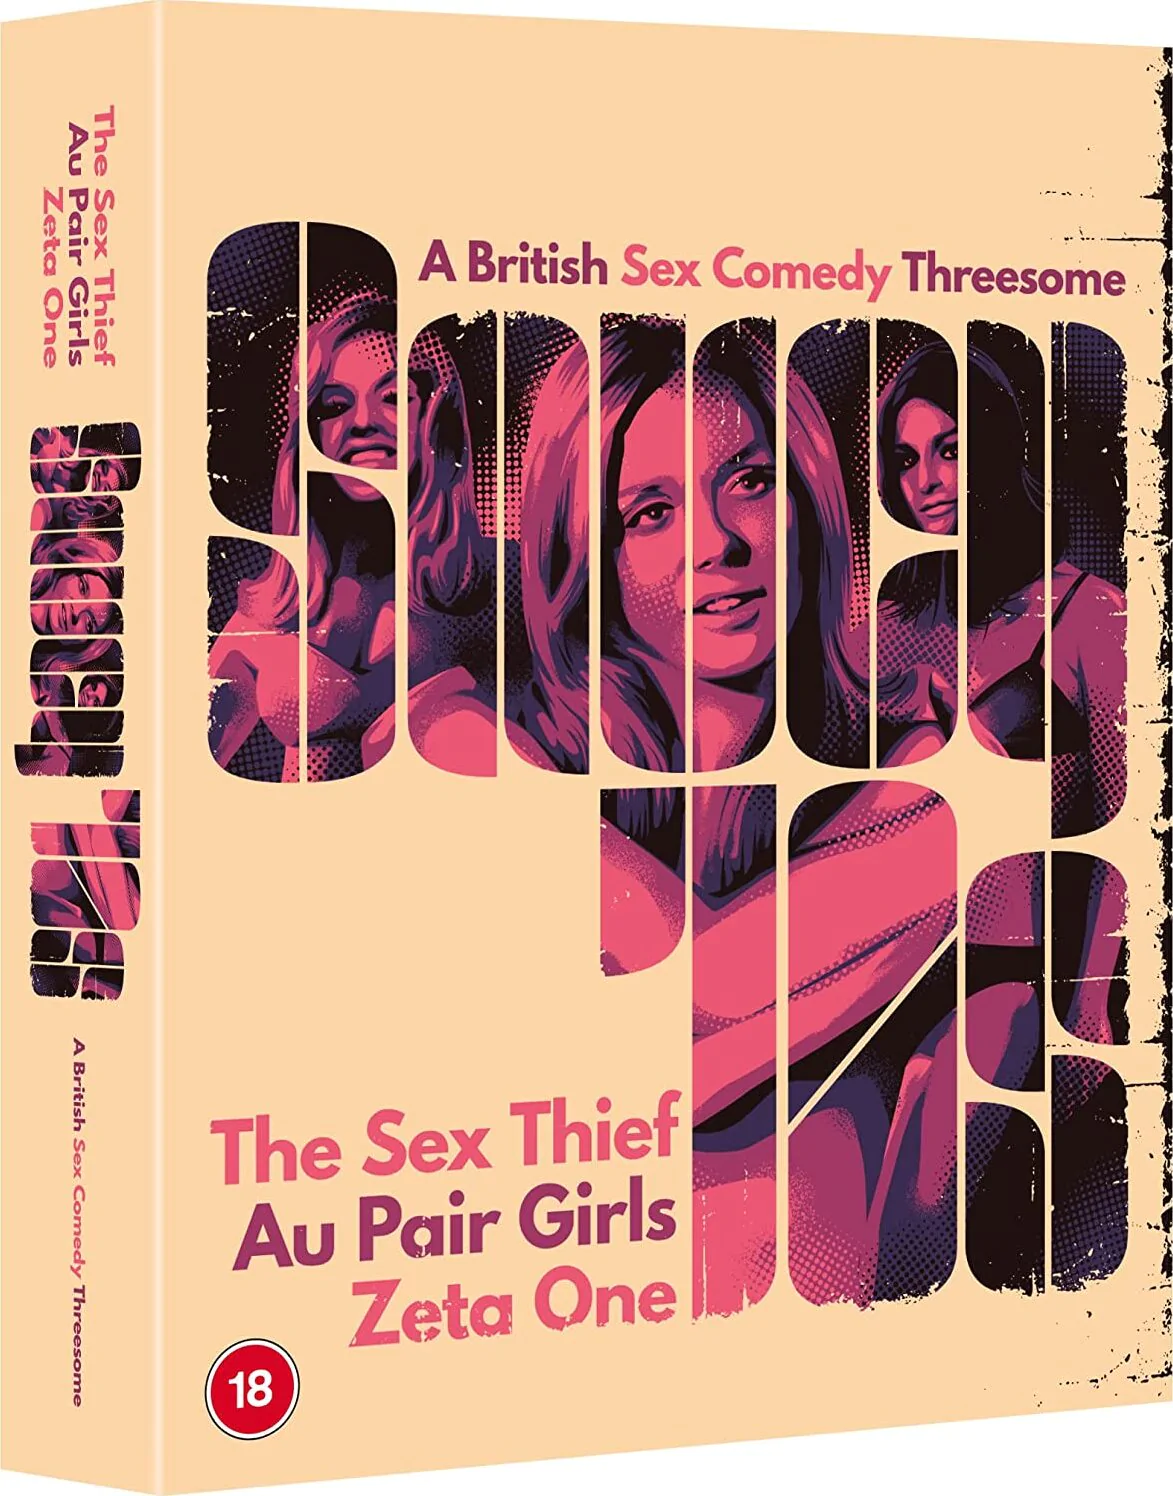 Saucy 70s A British Sex Comedy Threesome